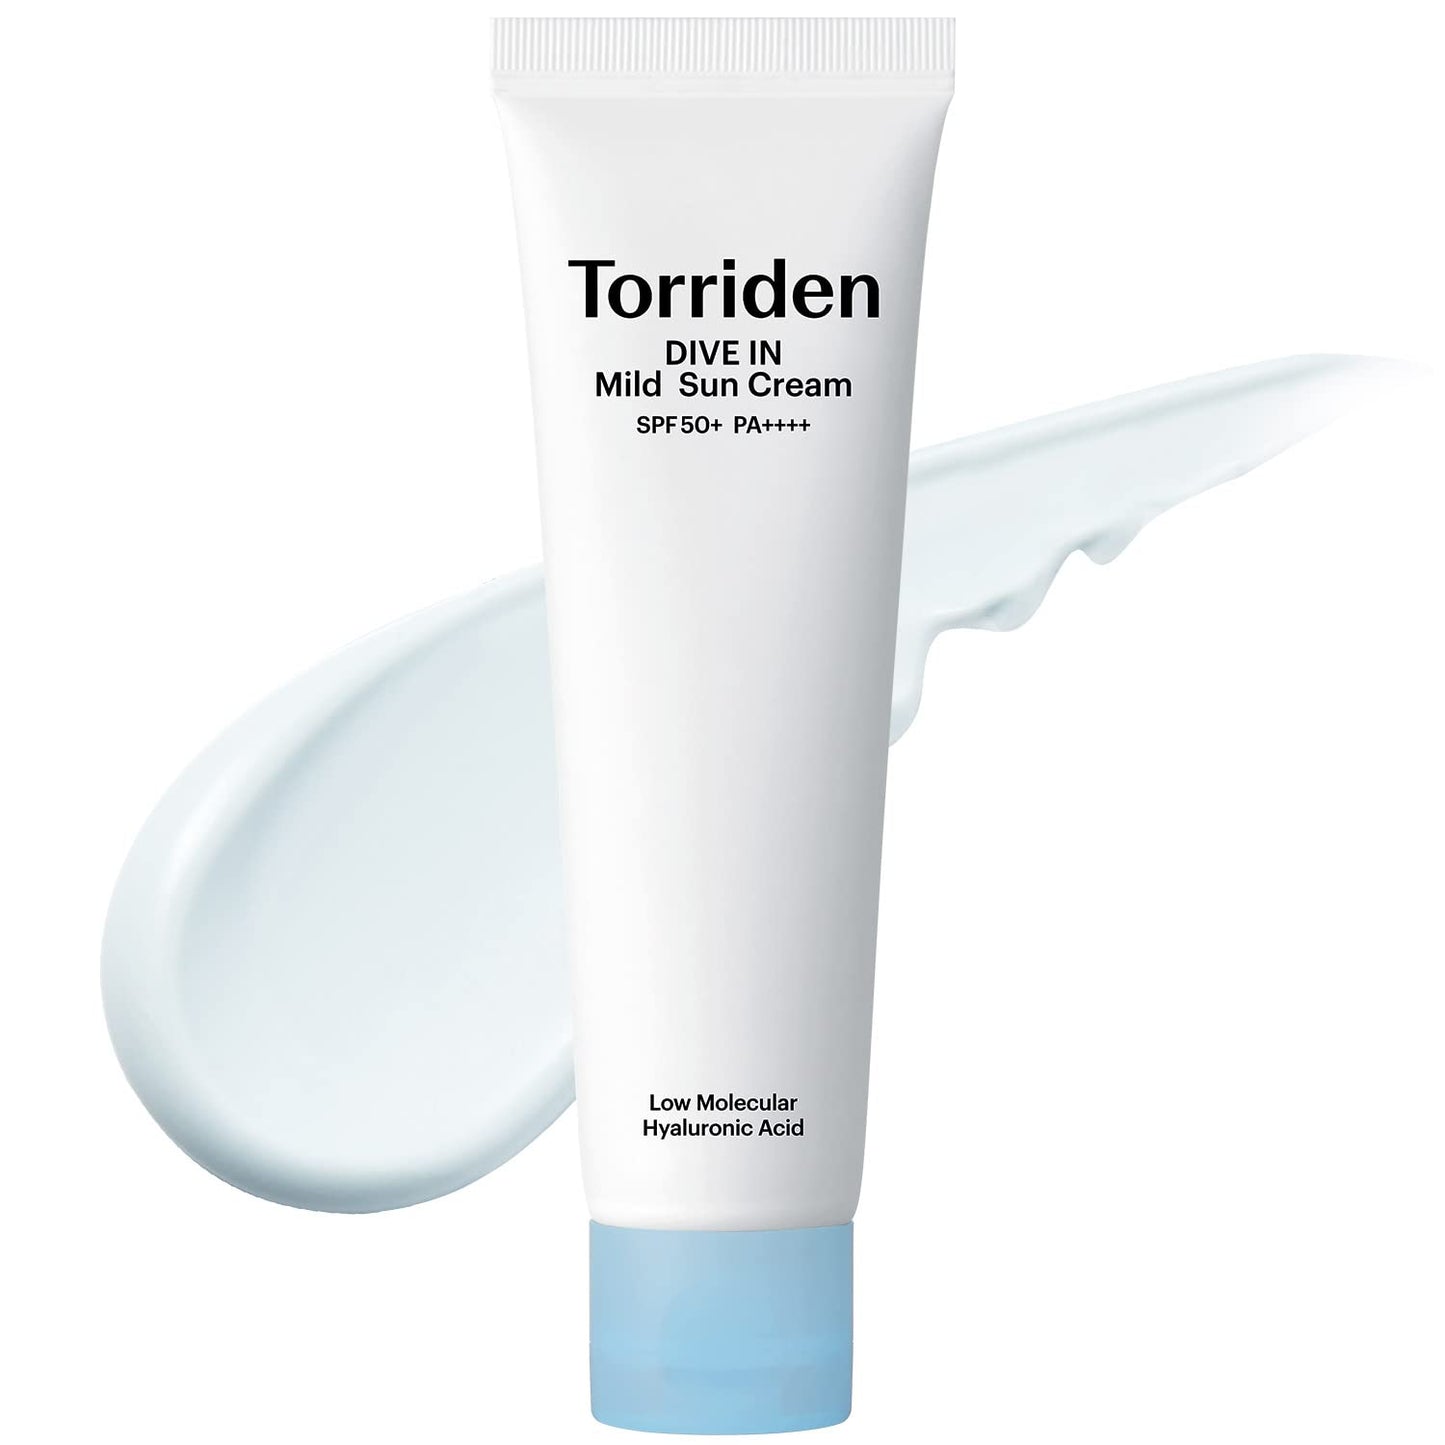 TORRIDEN DIVE-IN Mild Sunscreen, Vegan, Broad Spectrum SPF 50+ PA++++, Non-Nano, Reef-Safe Mineral Sunscreen for All Skin Types